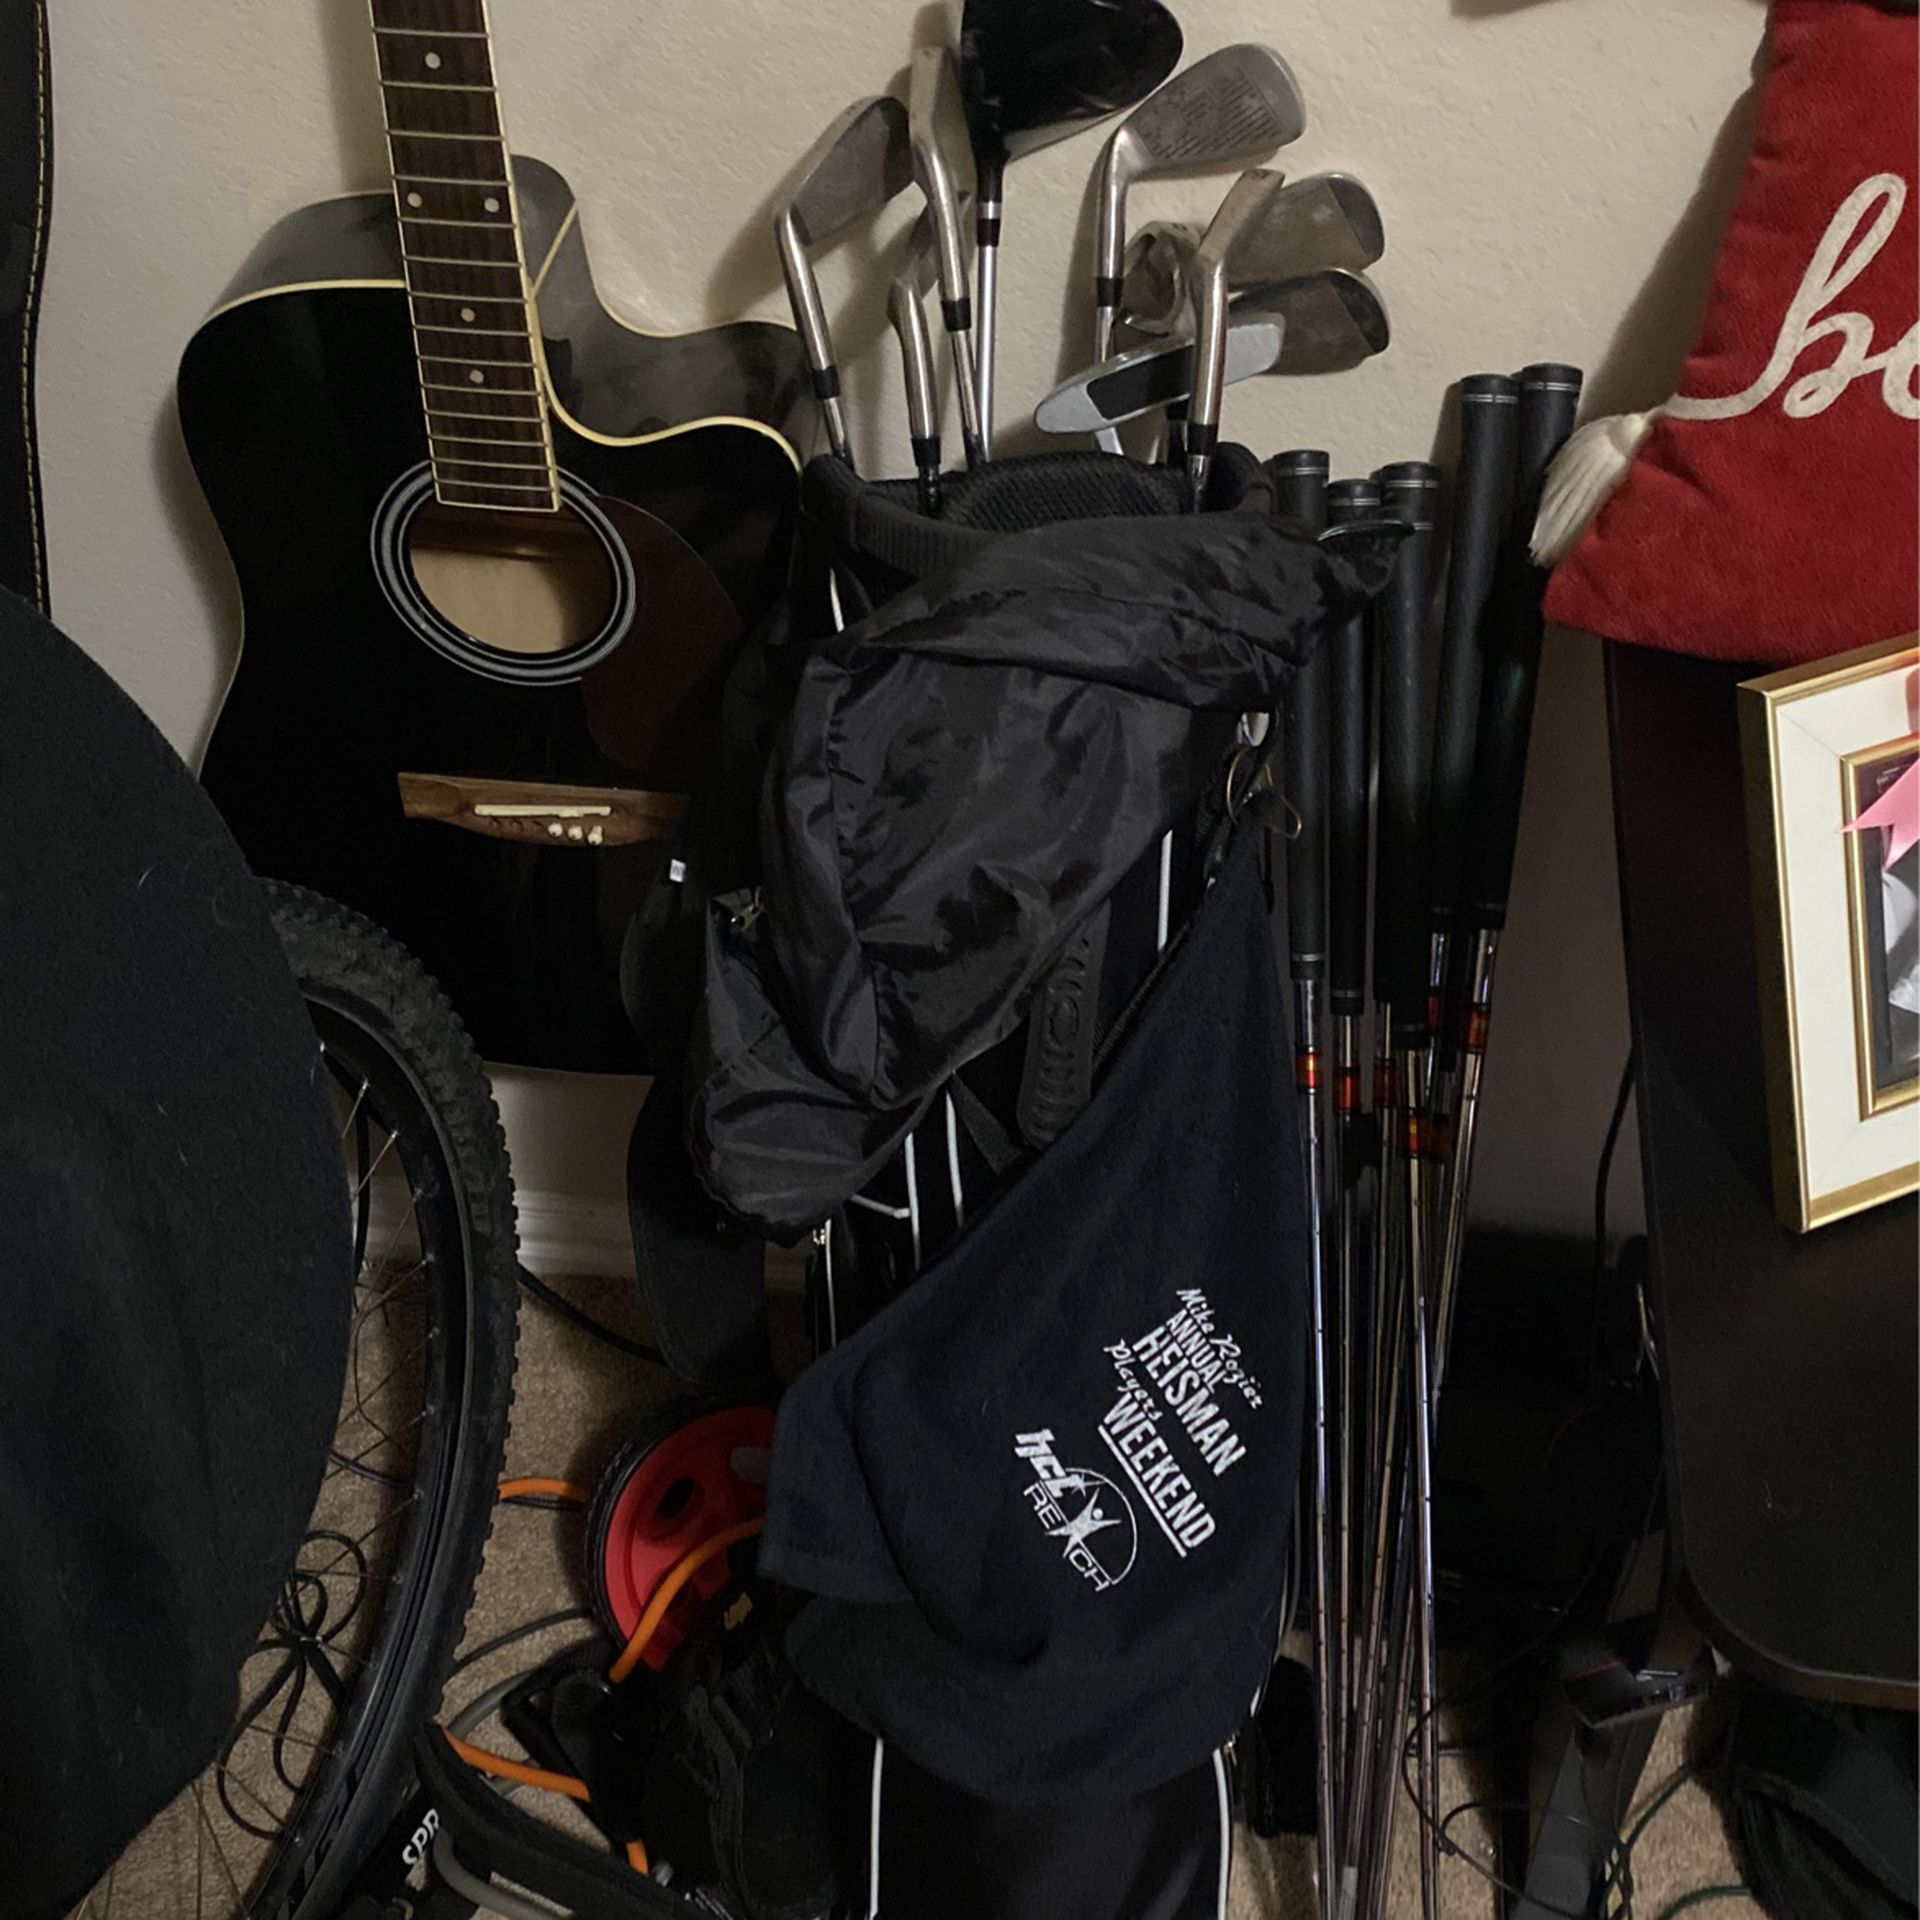 Used Golf Set New Bag New Driver 